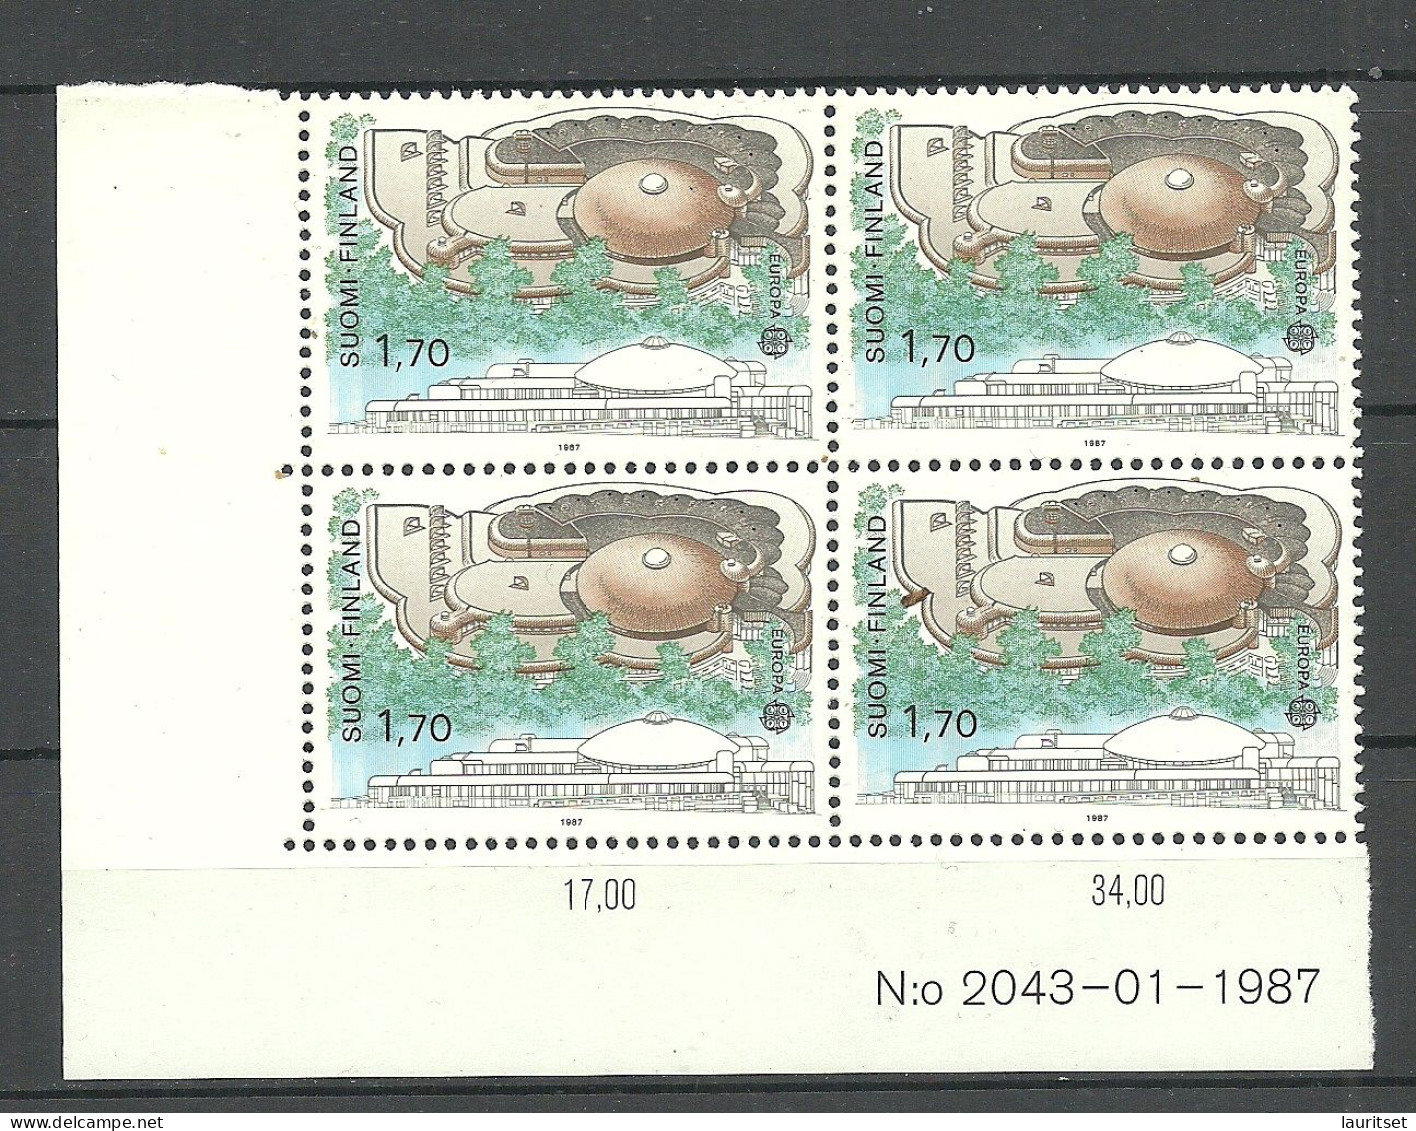 FINLAND FINNLAND 1987 Michel 1021 As 4-block With Order No MNH Europa Cept Arhitektur Architecture - Unused Stamps